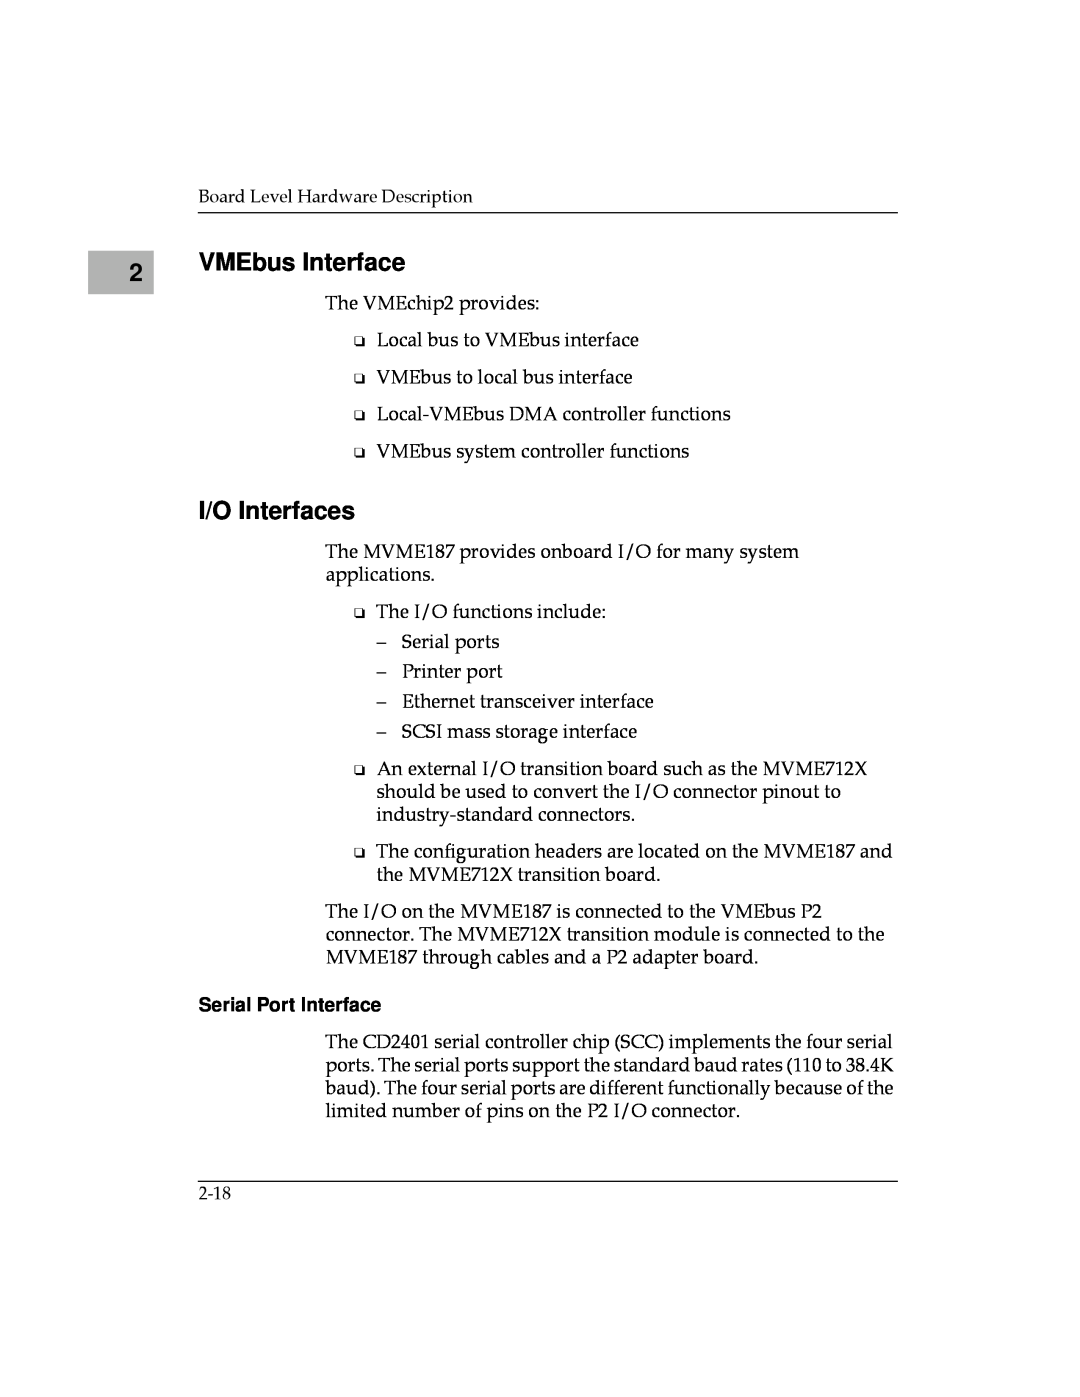 Motorola MVME187 manual VMEbus Interface, I/O Interfaces, Serial Port Interface 